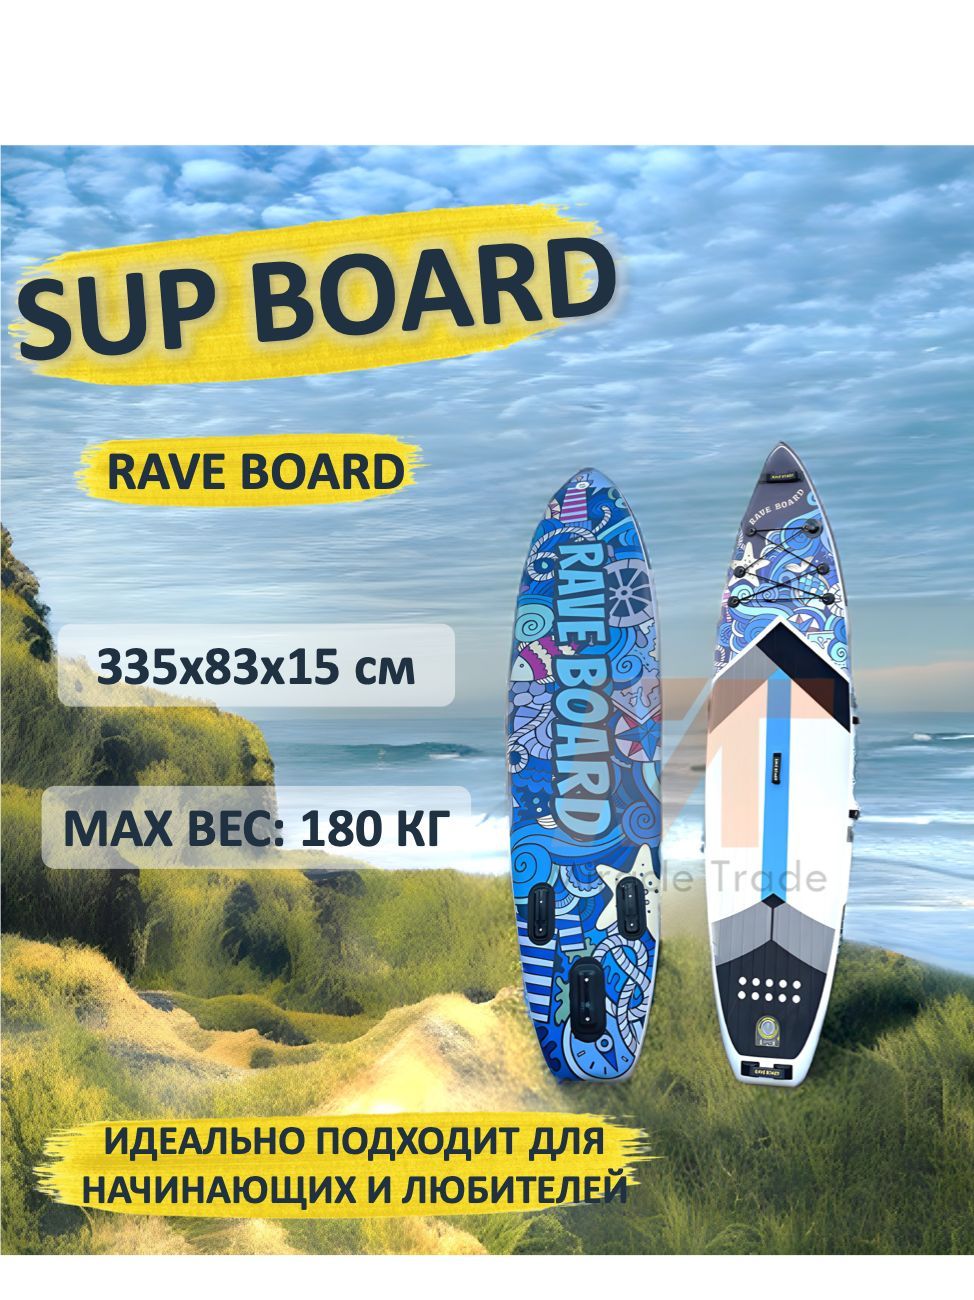 Rave board. Сапборд Rave Board. Rave Board Sea. САП Rave Board описание. Rave Board космонавт.